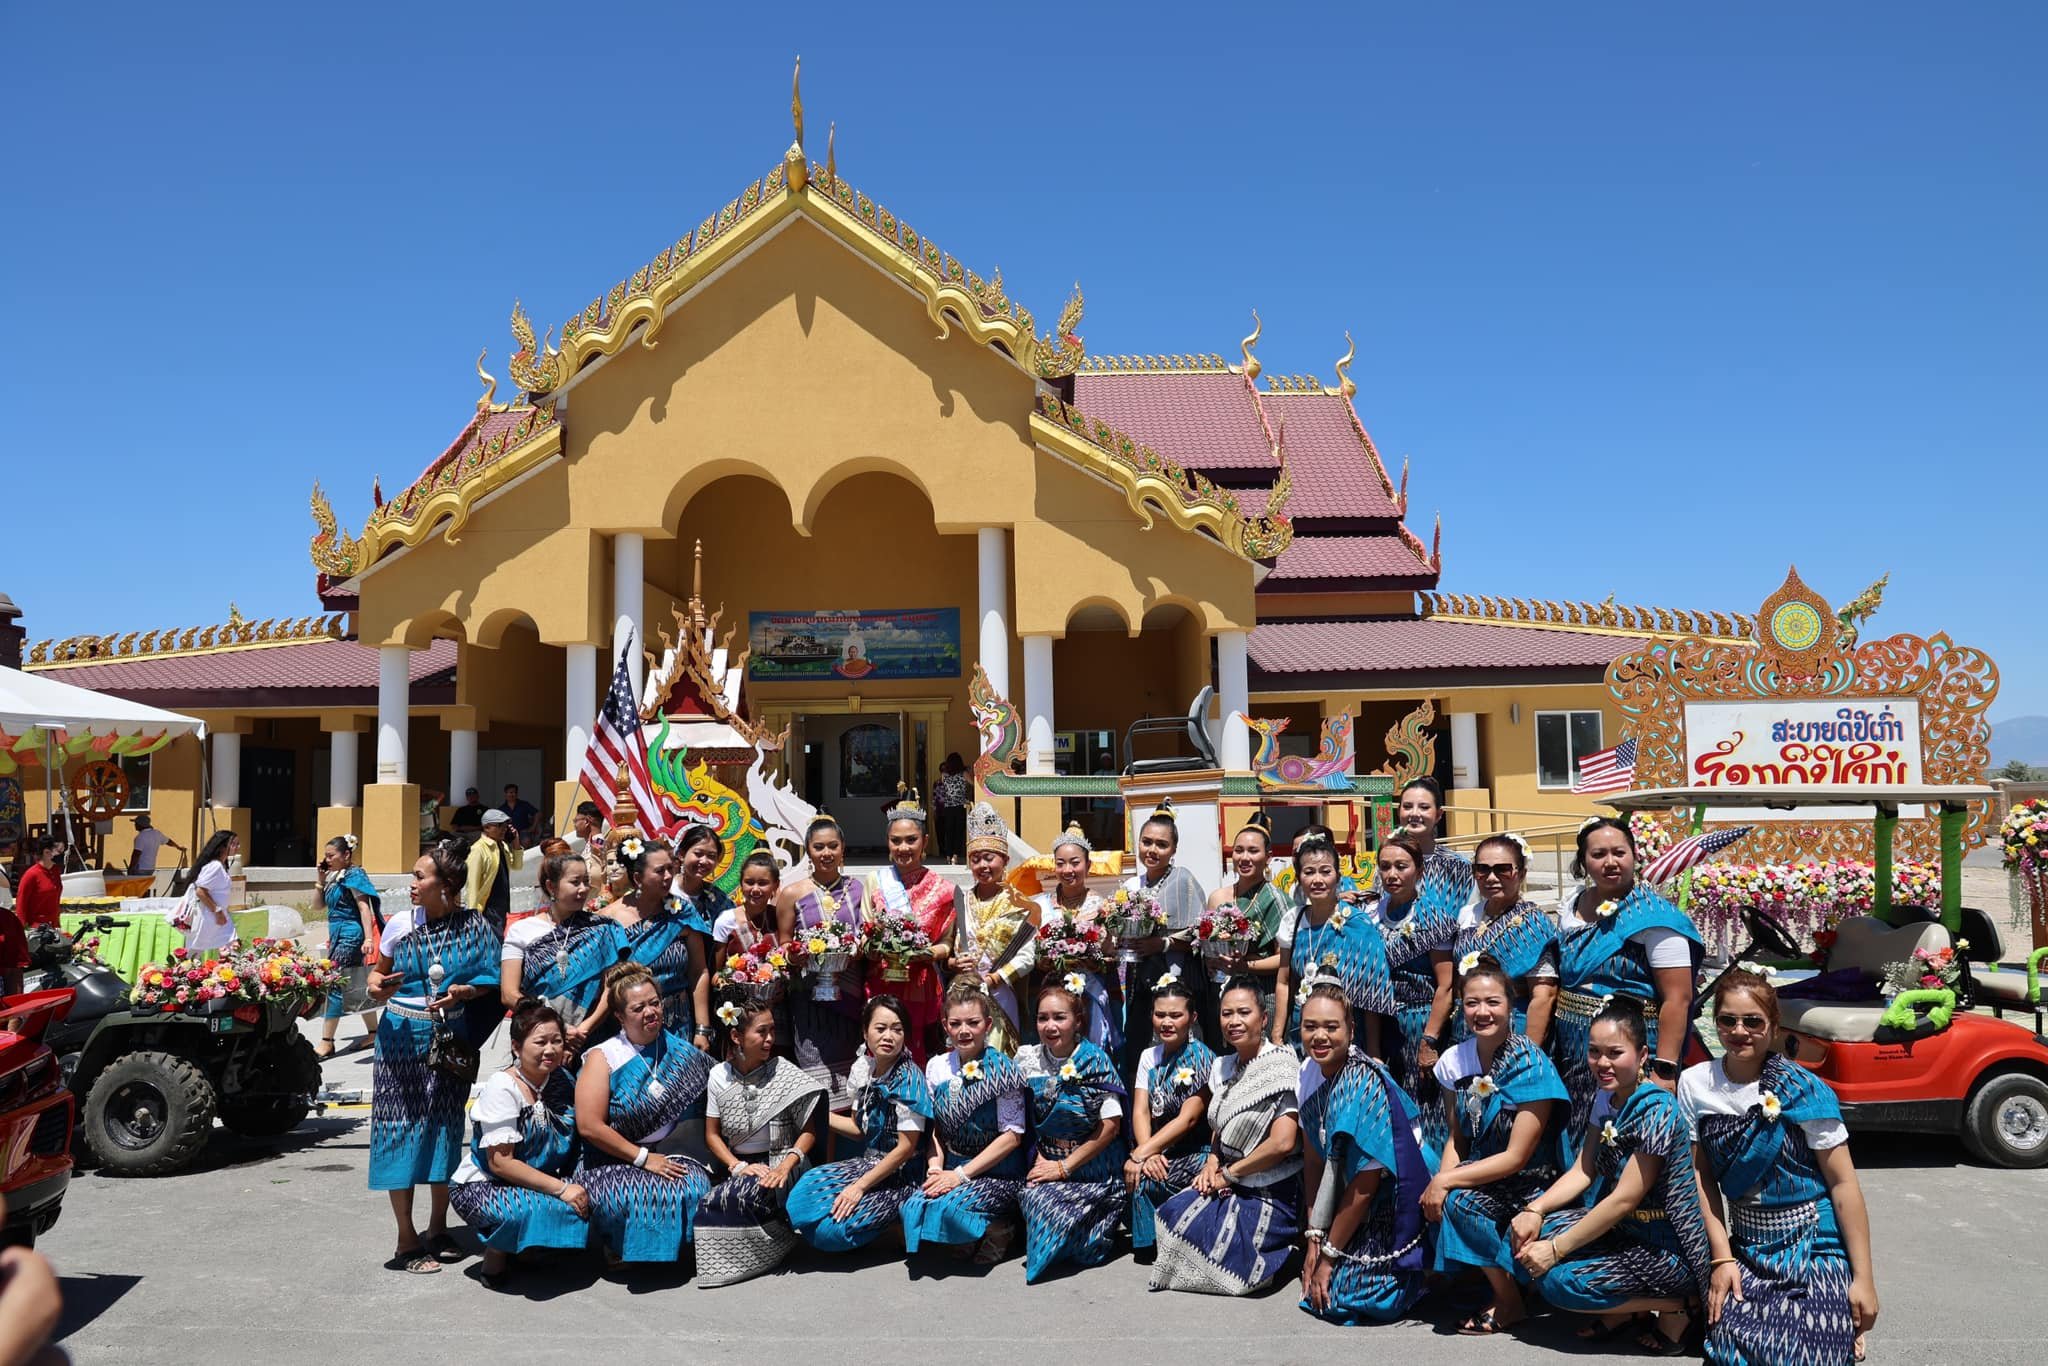 Promoting cultural understanding at Wat Lao Salt Lake Buddharam.